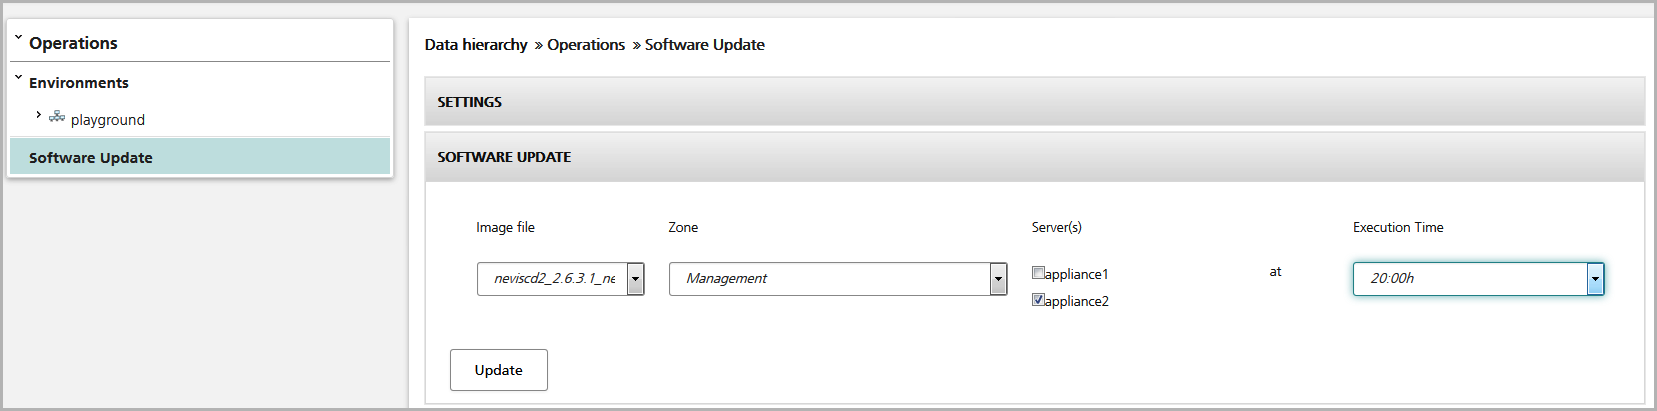 Software Update view